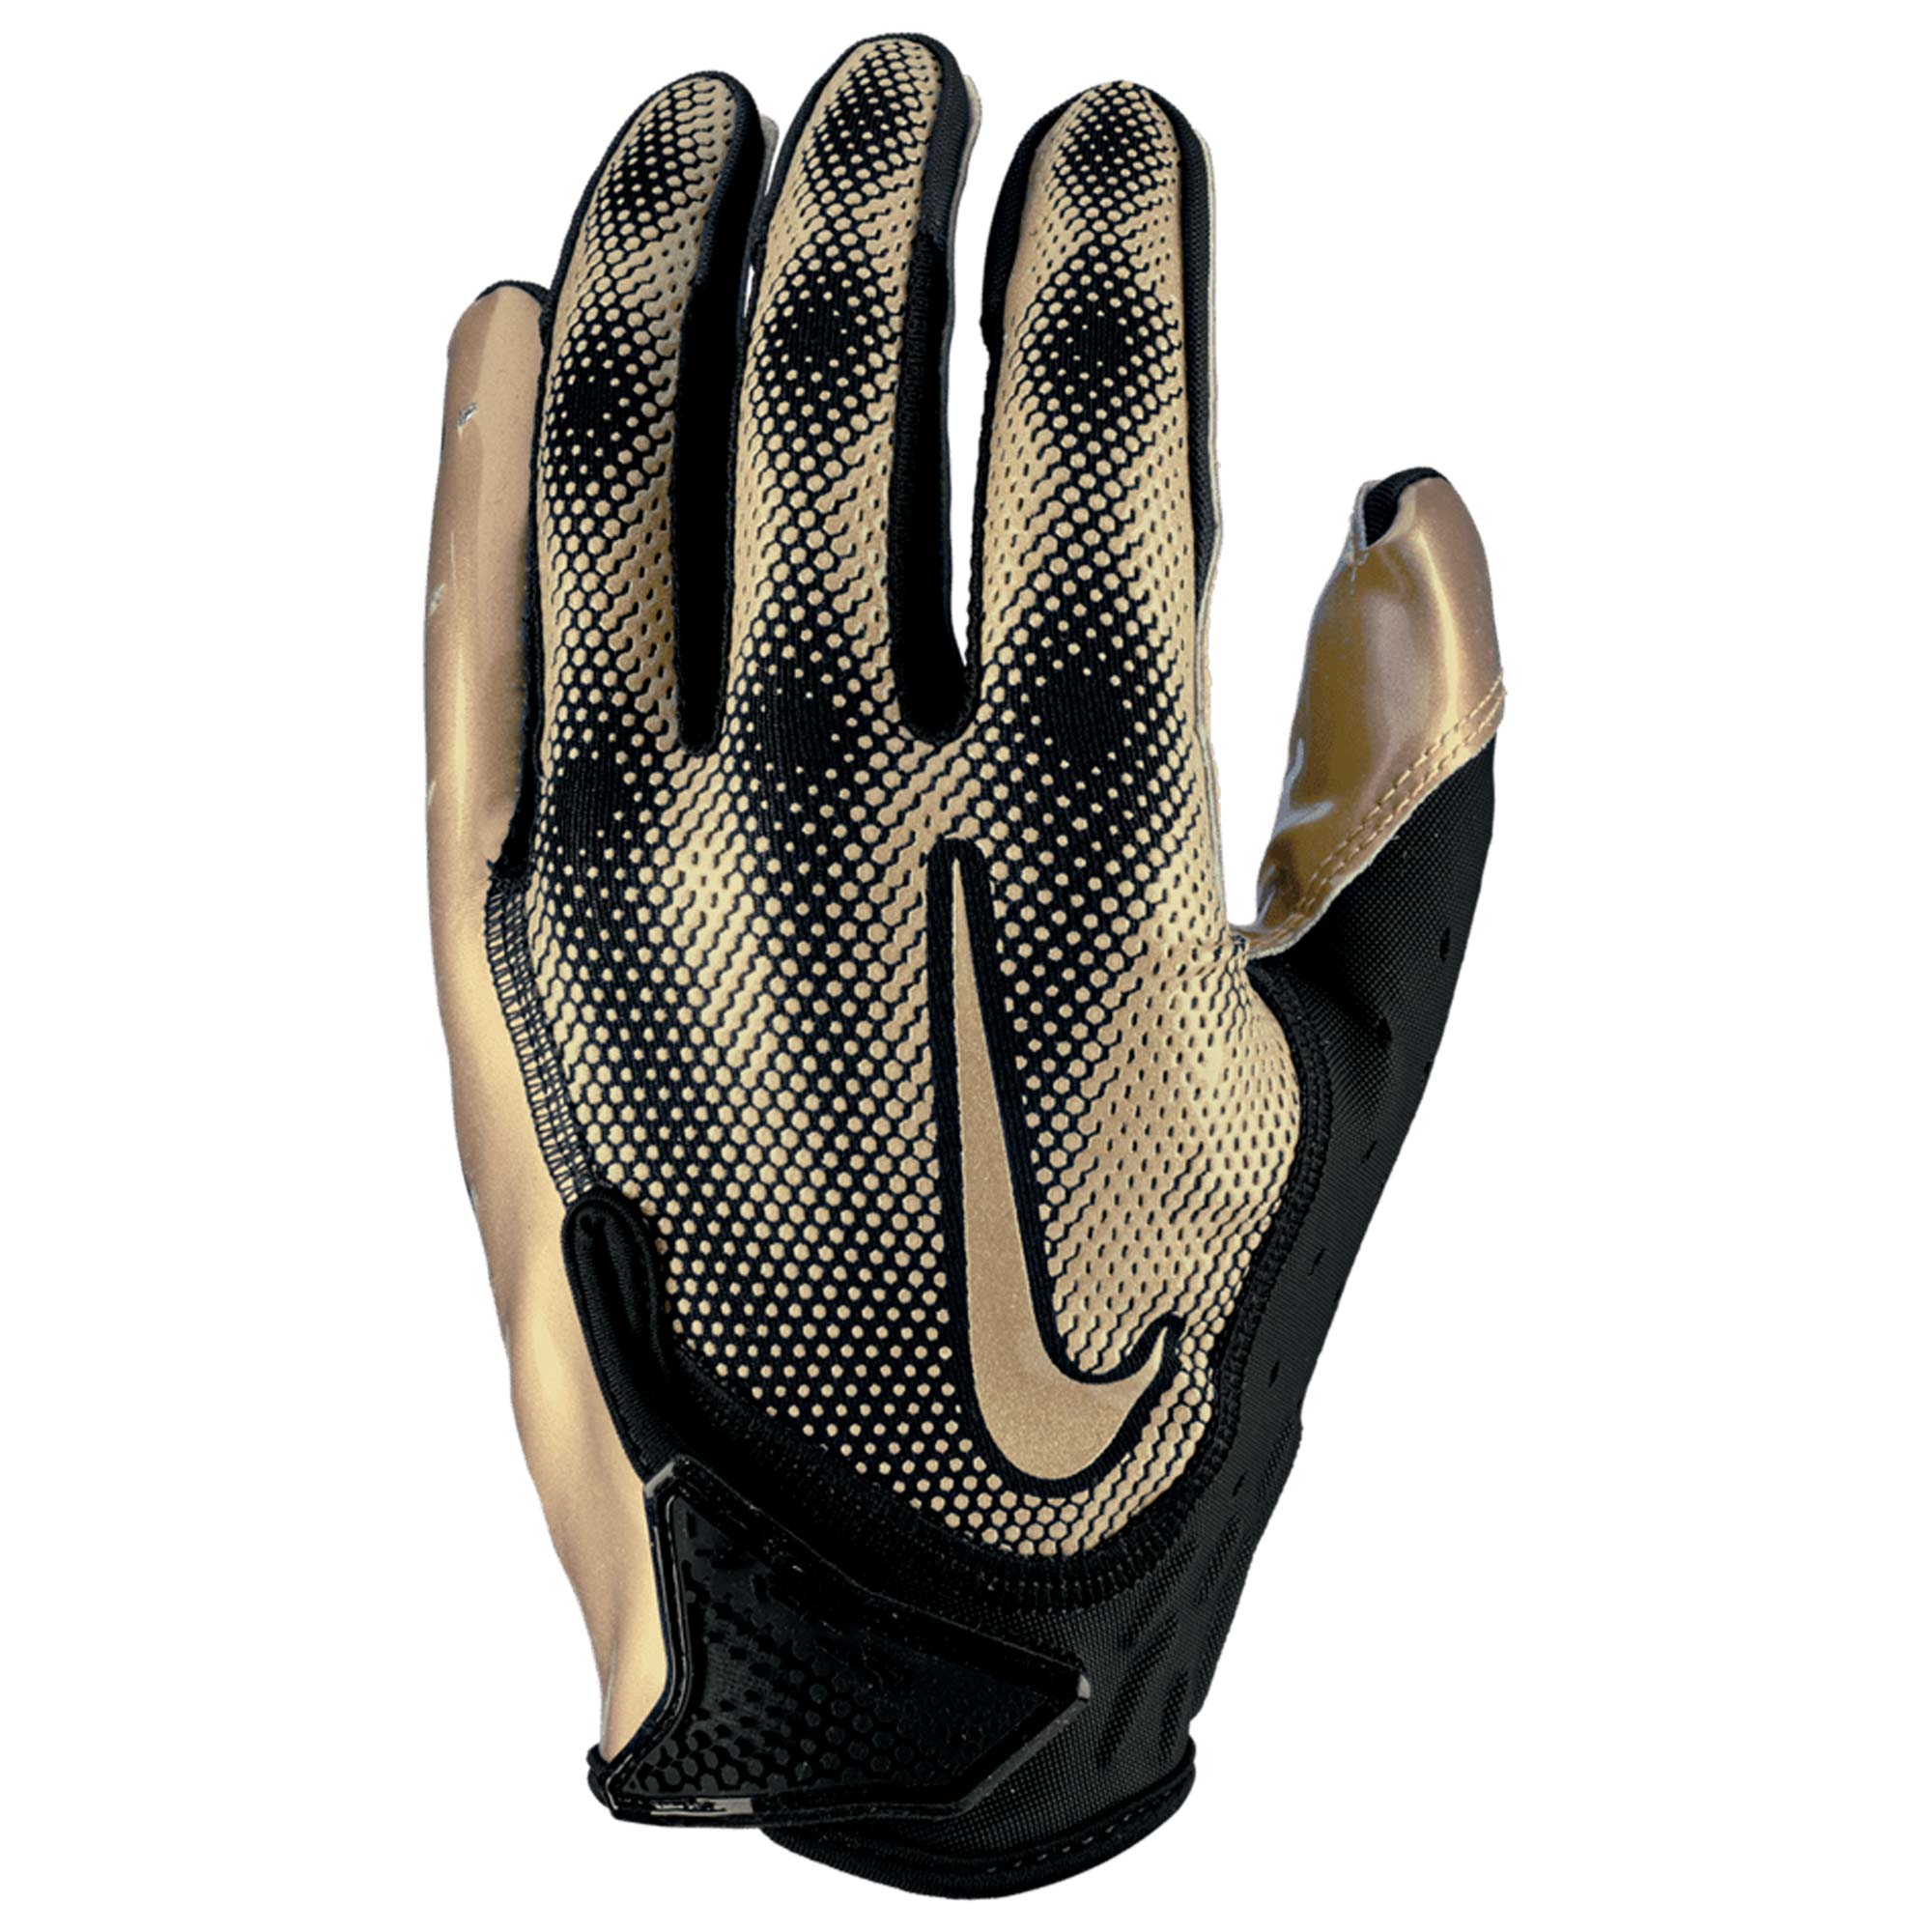 Nike Vapor Jet 7.0 Football Gloves Metallic